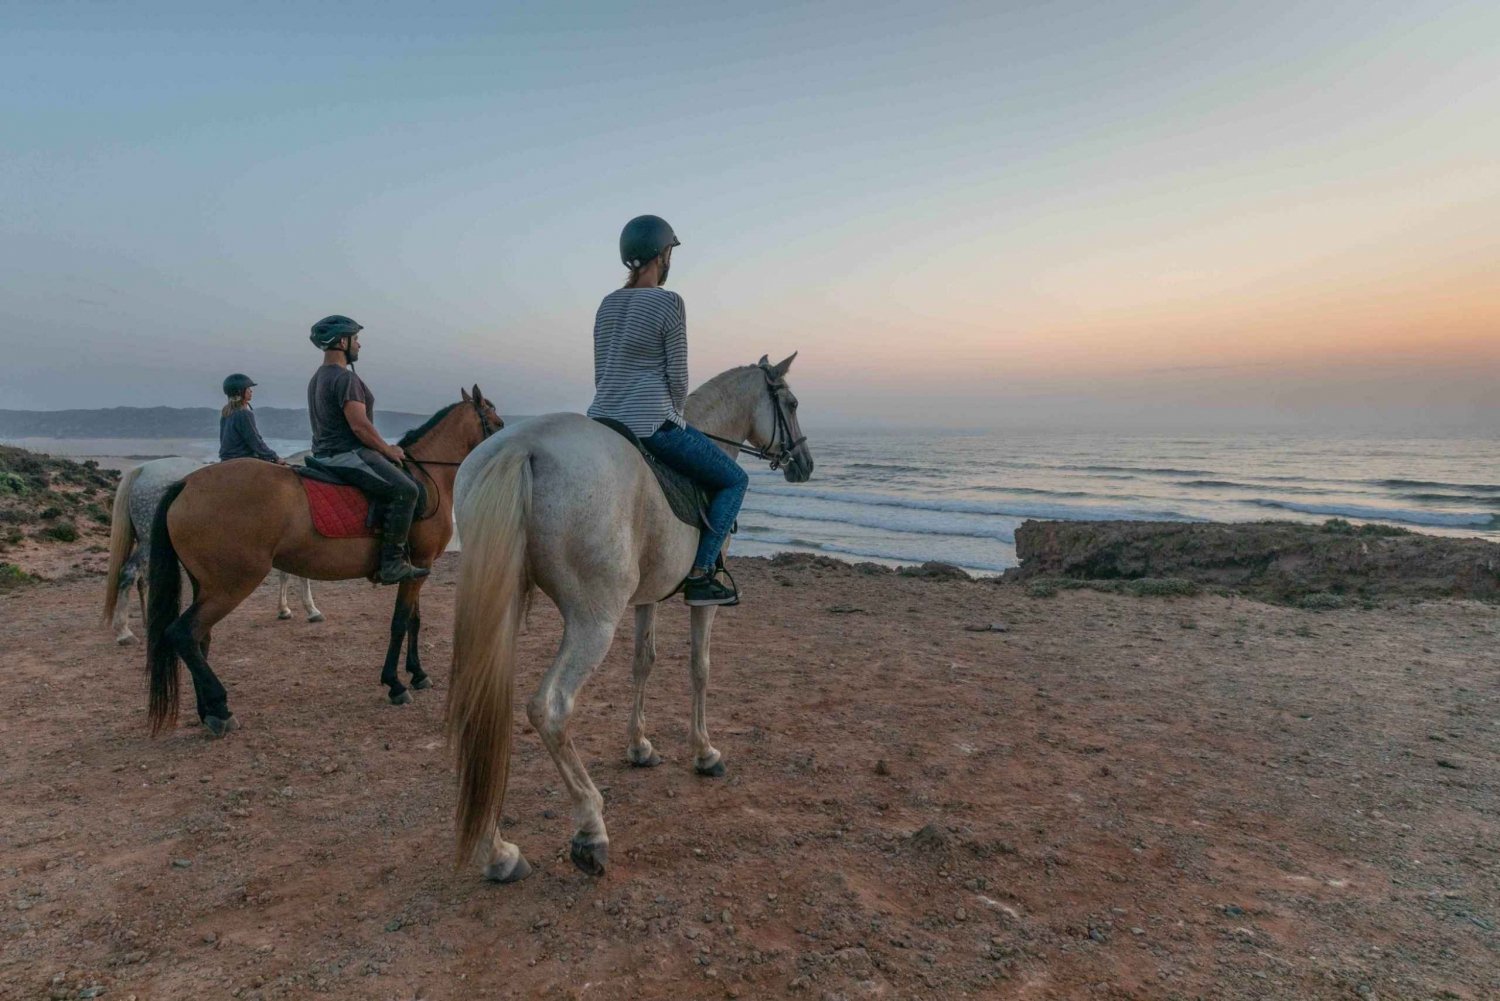 Algarve: Strandritt bei Sonnenuntergang oder am Morgen